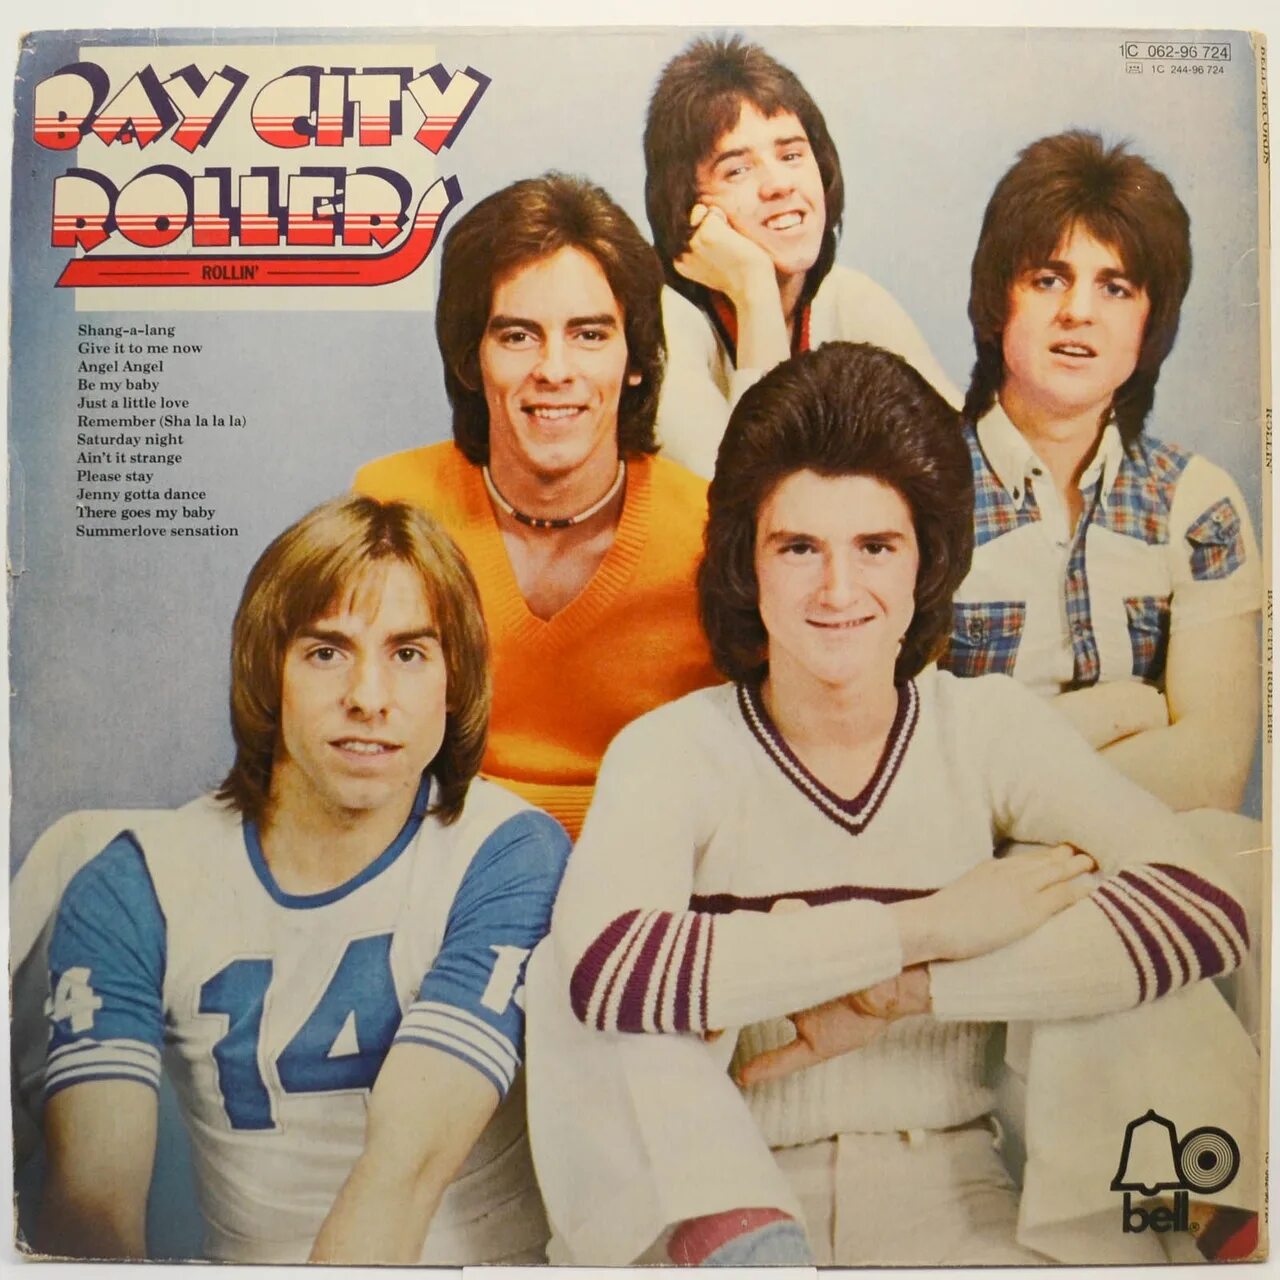 City rolling. Bay City Rollers. Группа Bay City Rollers. Группа Bay City Rollers Англия фото. Bay City Rollers Ricochet 1981.